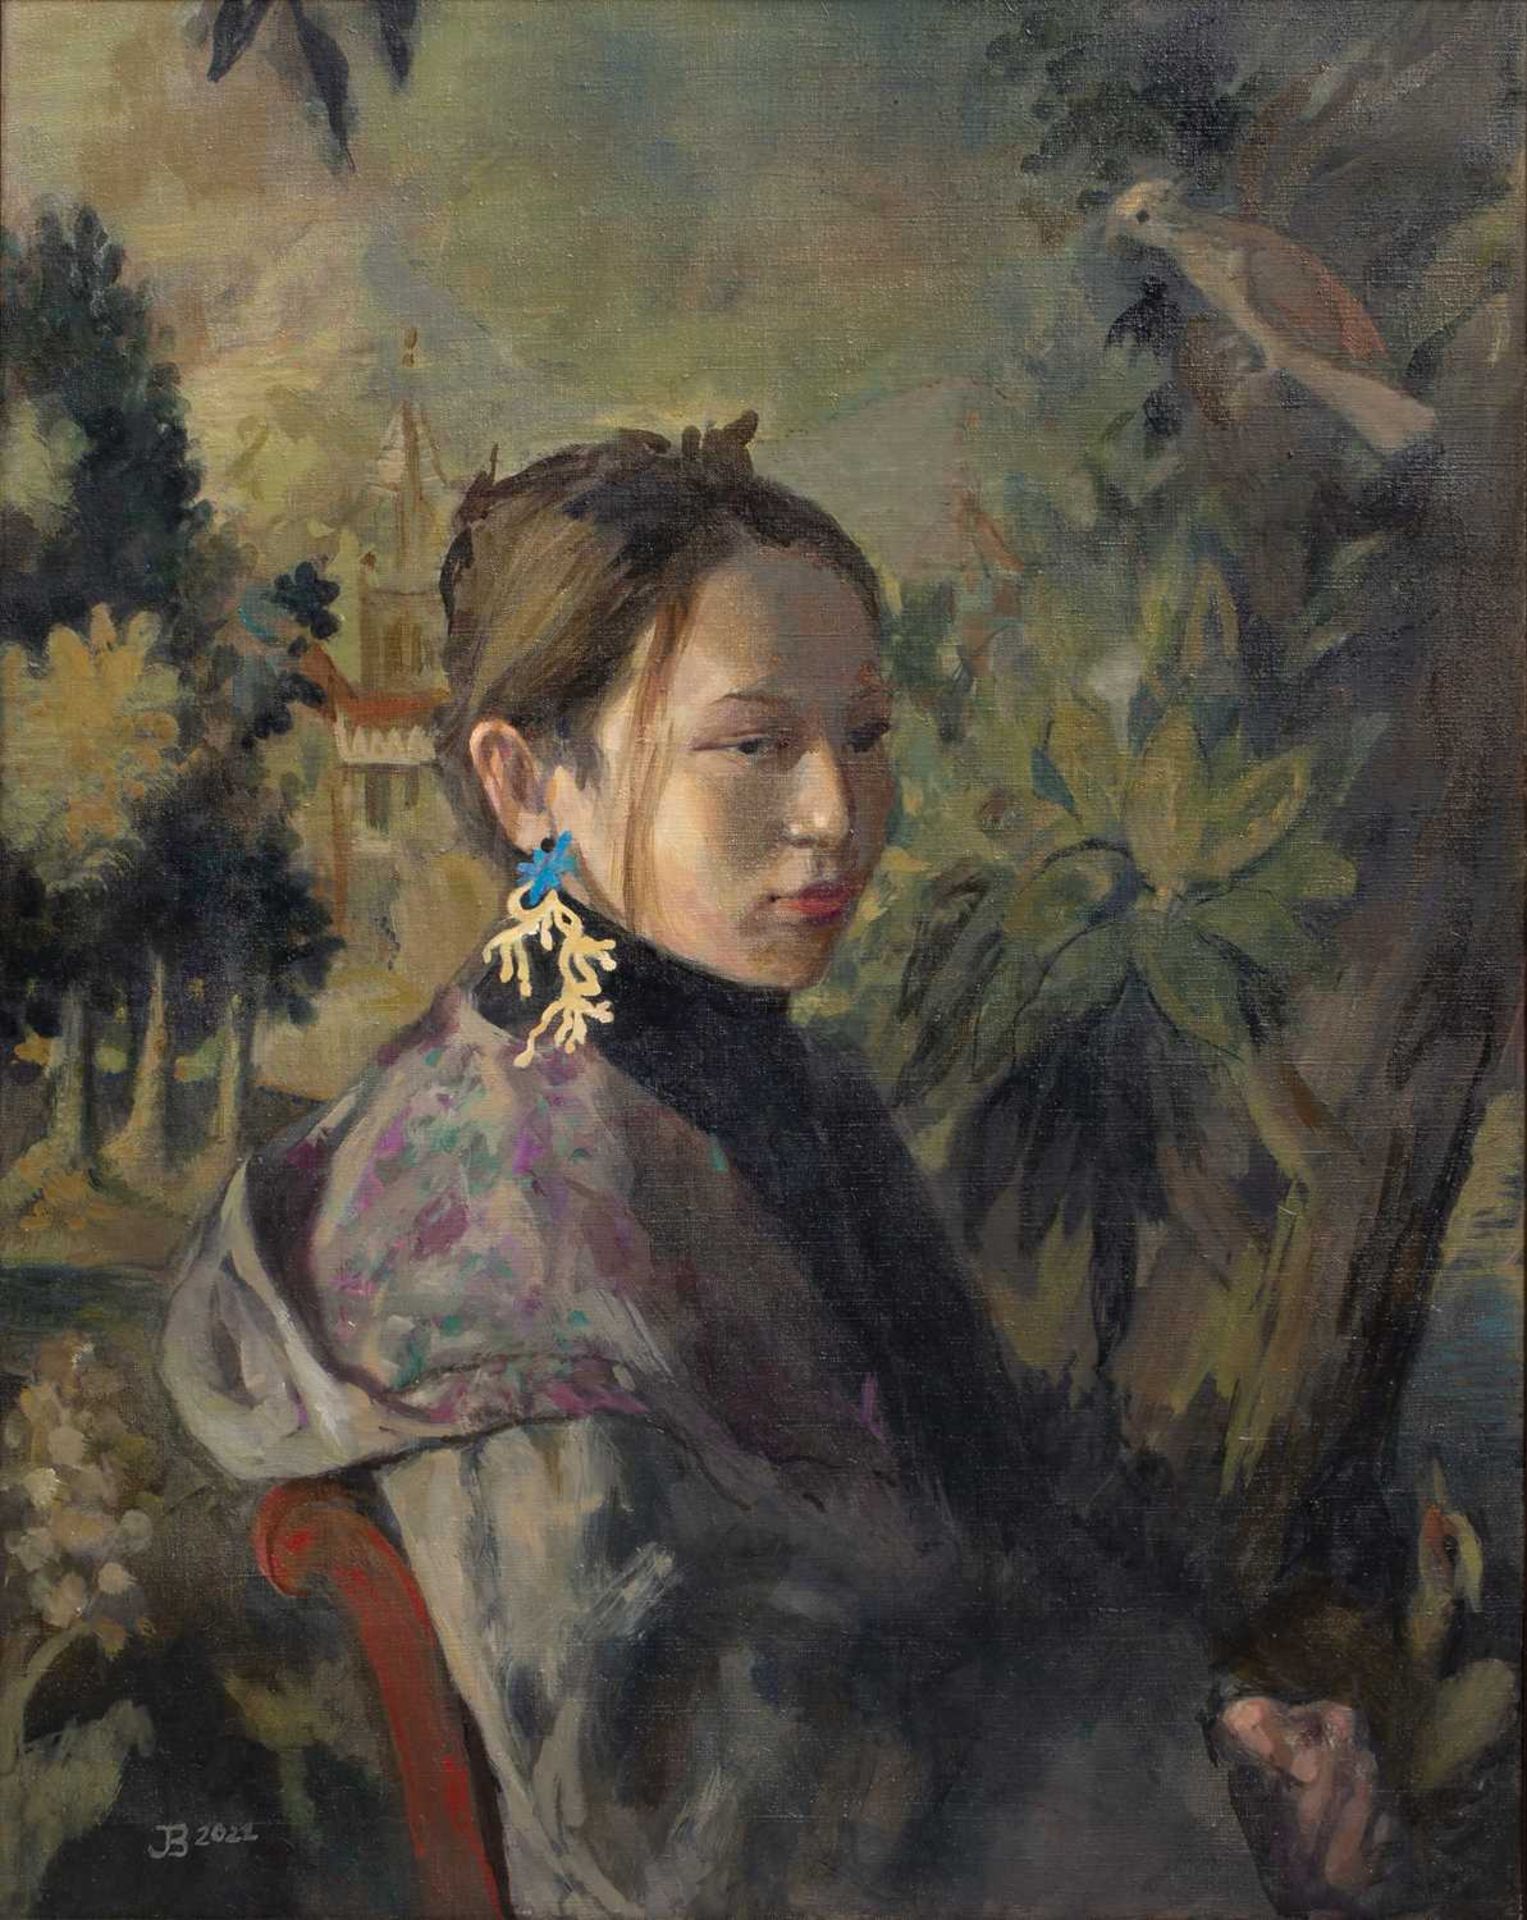 Jane Bond (1939) 'Etta', head and shoulder portrait, oil on canvas. 75cm x 59cm Mounted in an